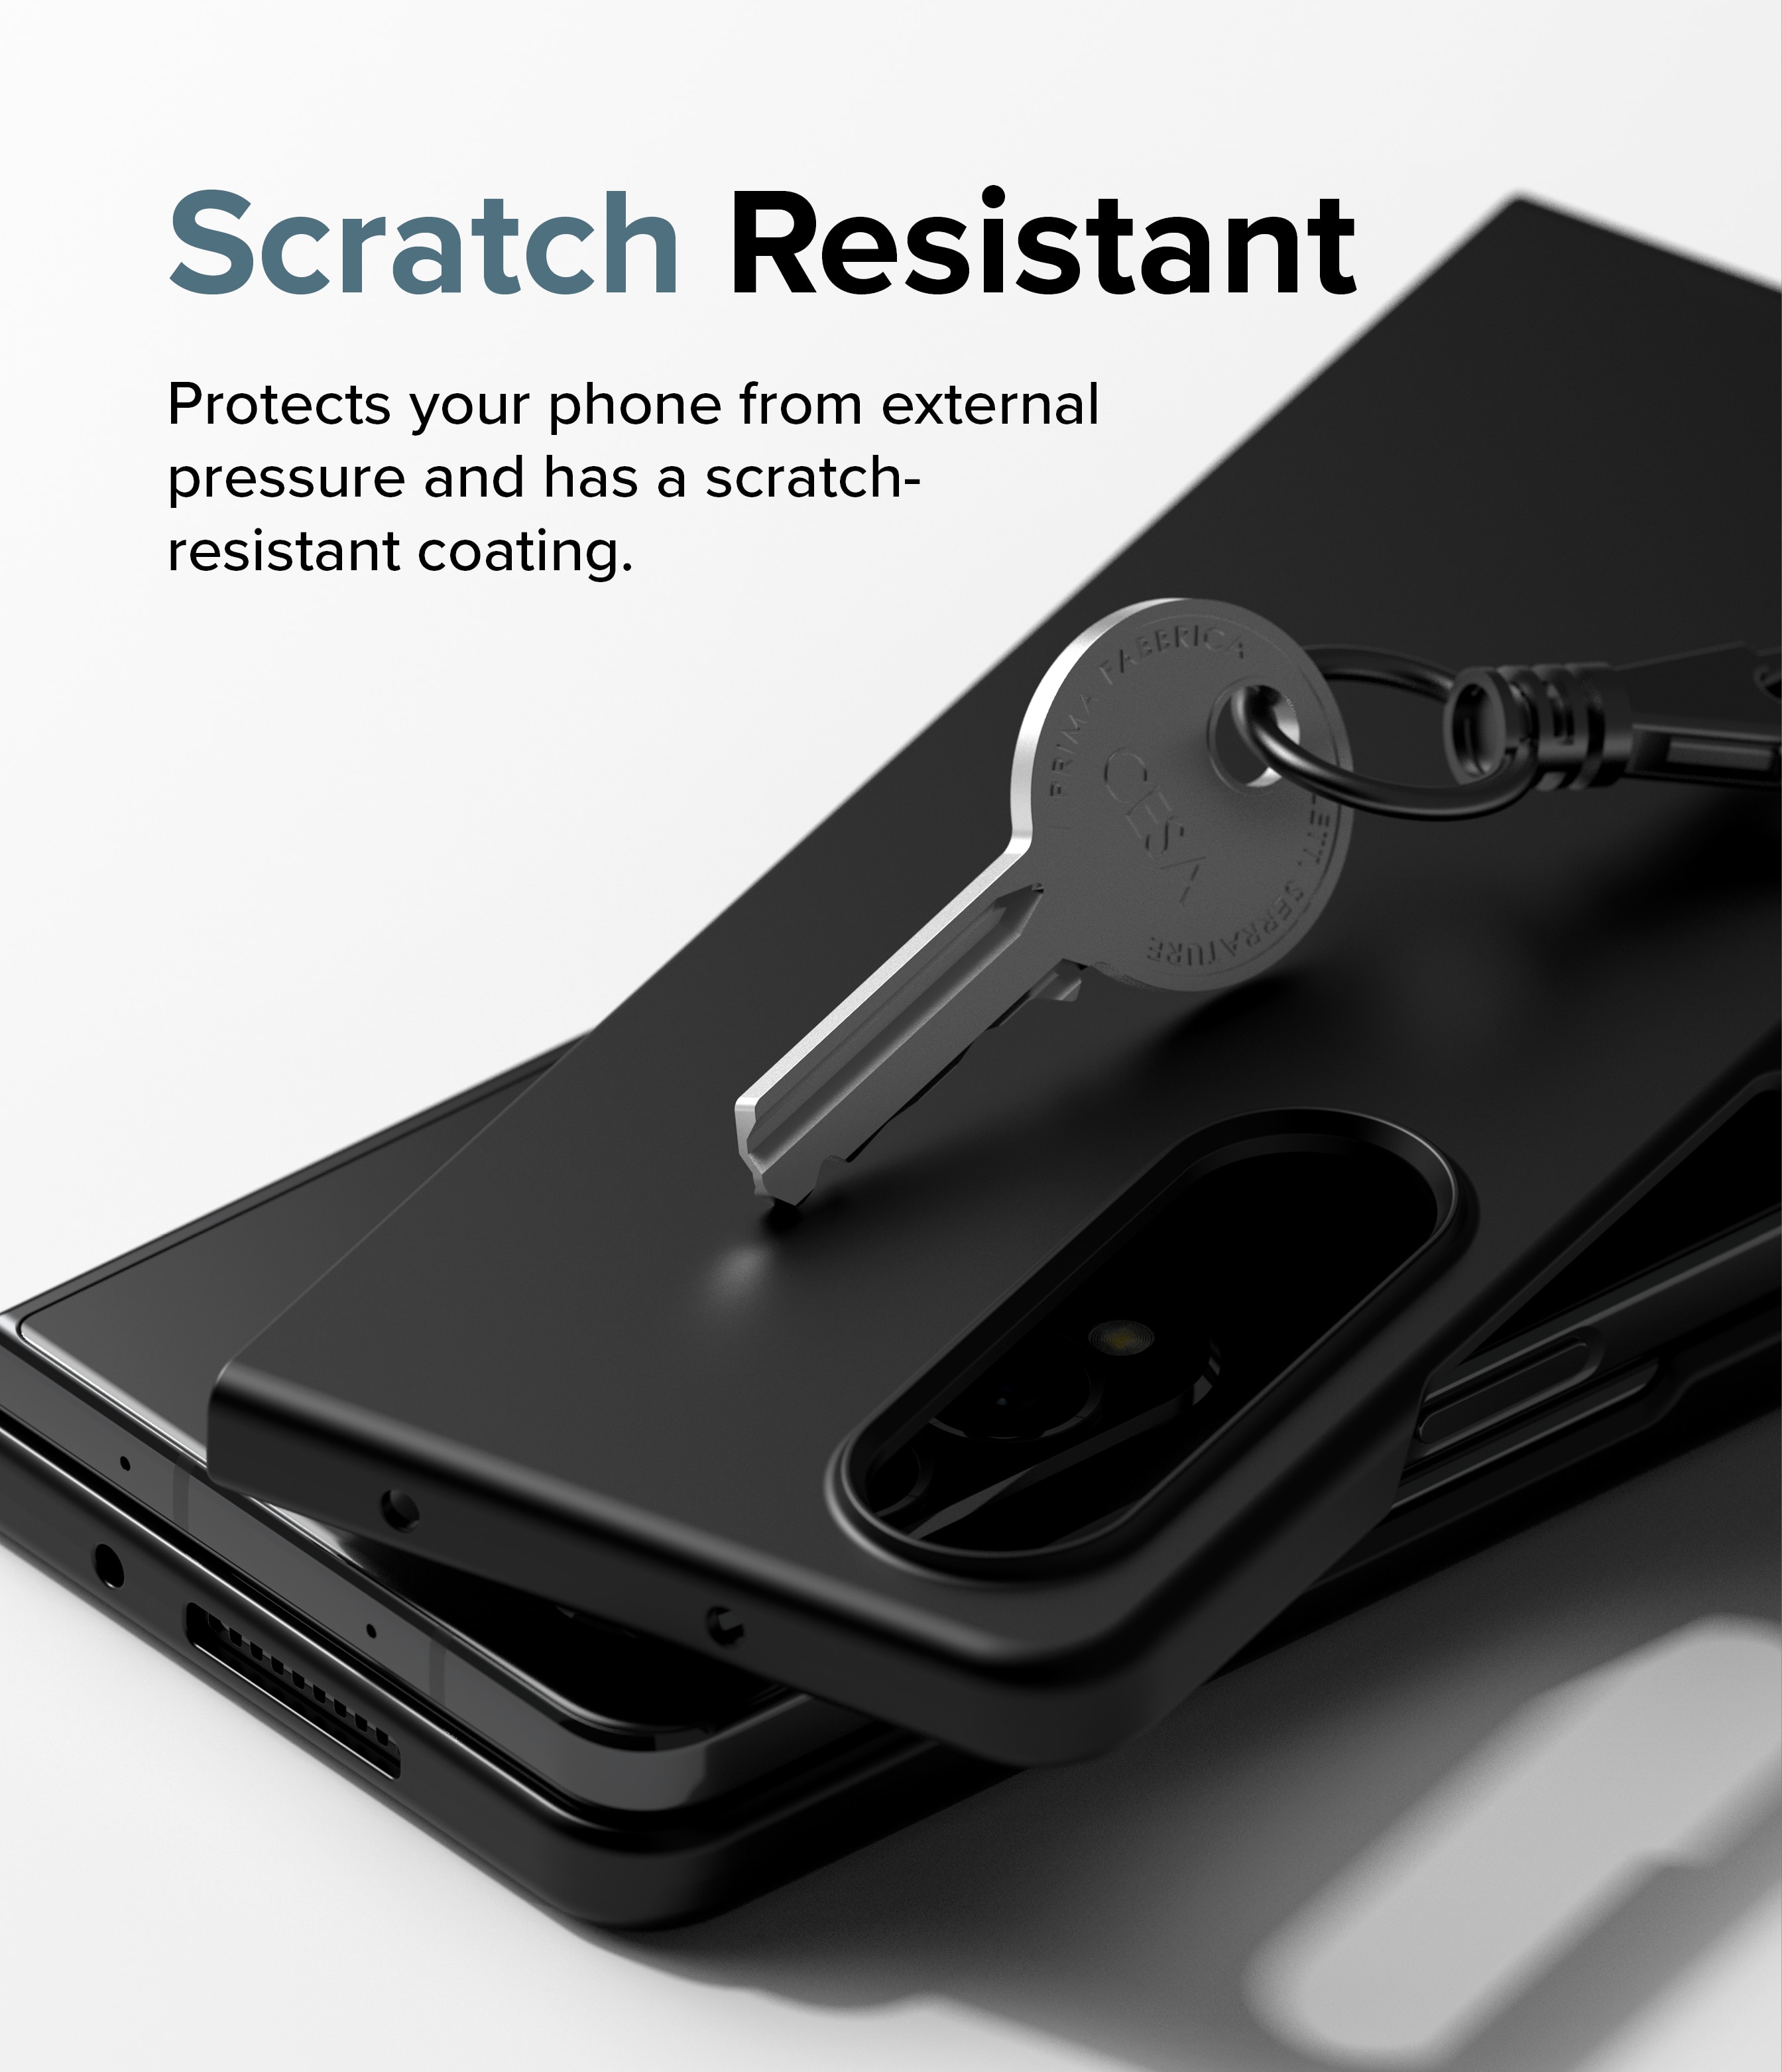 Samsung Galaxy Z Fold 4 Slim Case Black